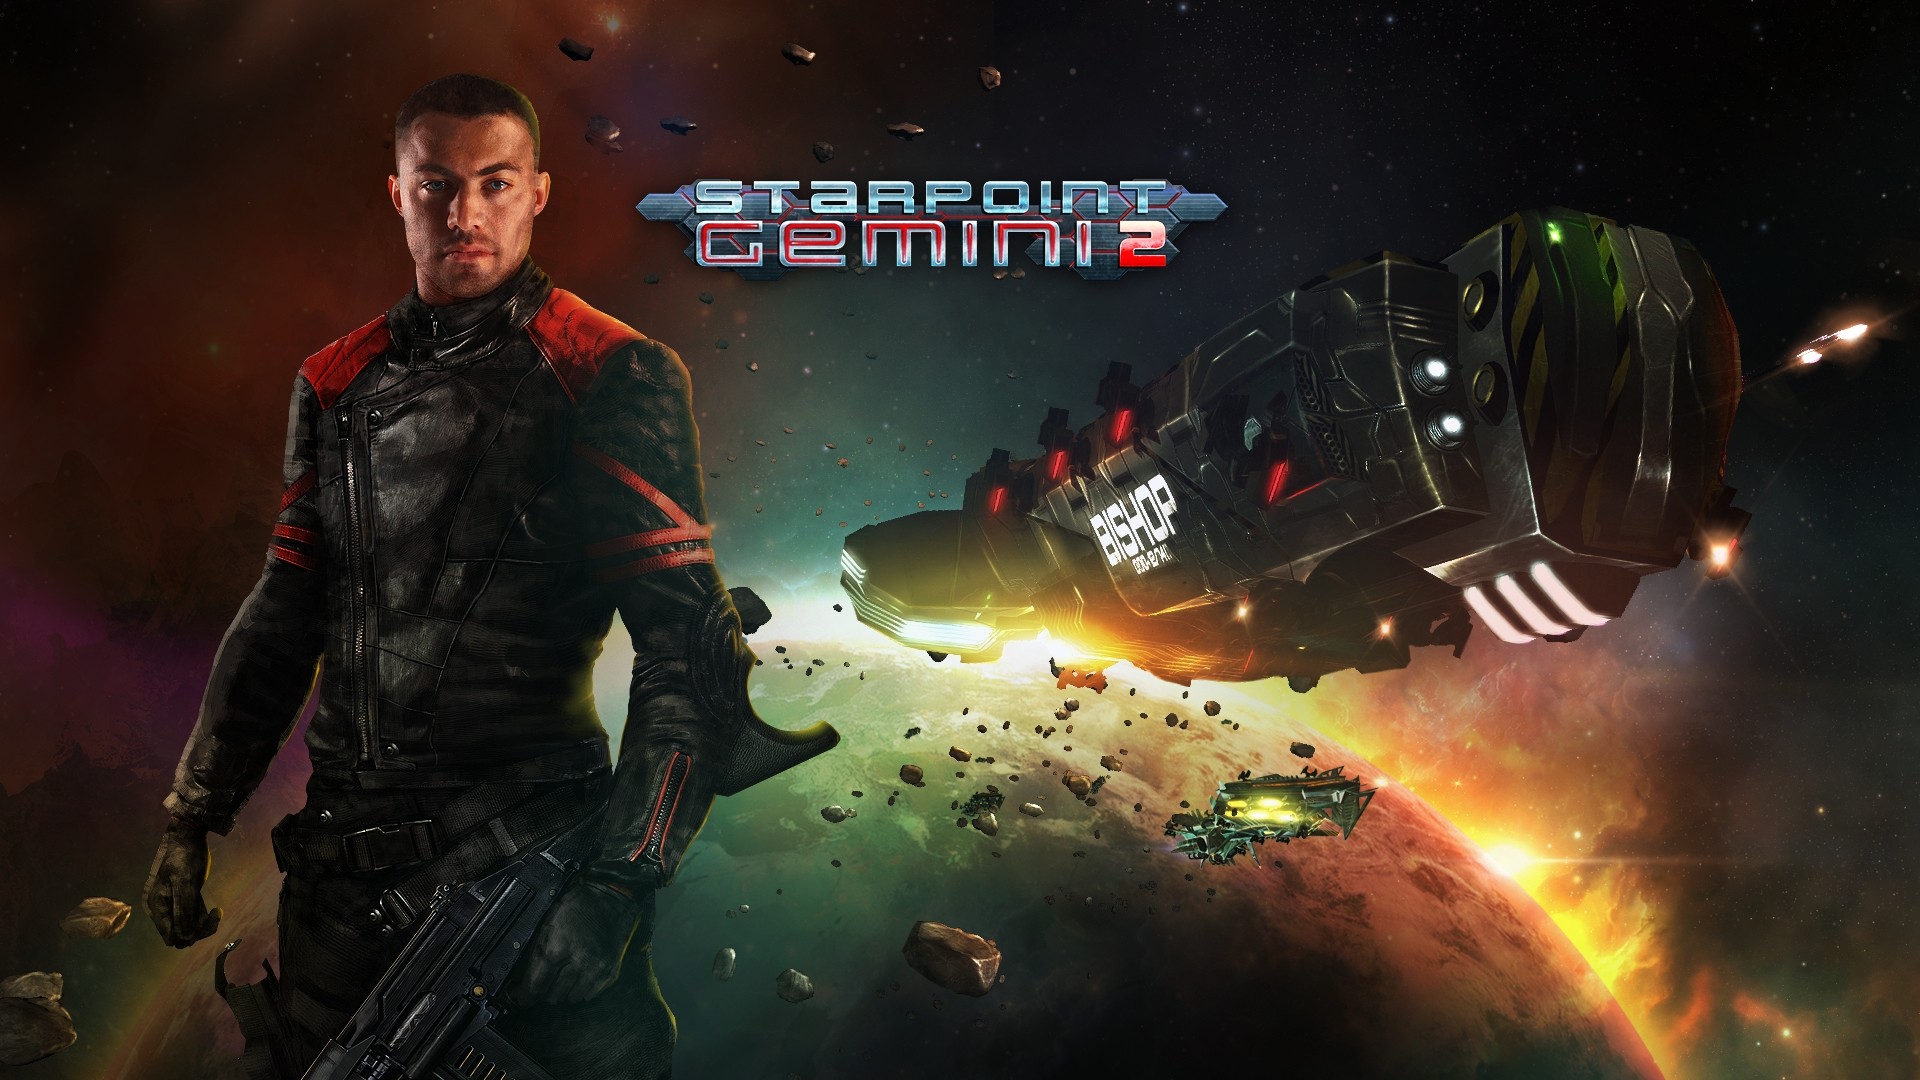 General 1920x1080 Starpoint Gemini 2 video games science fiction digital art spaceship soldier